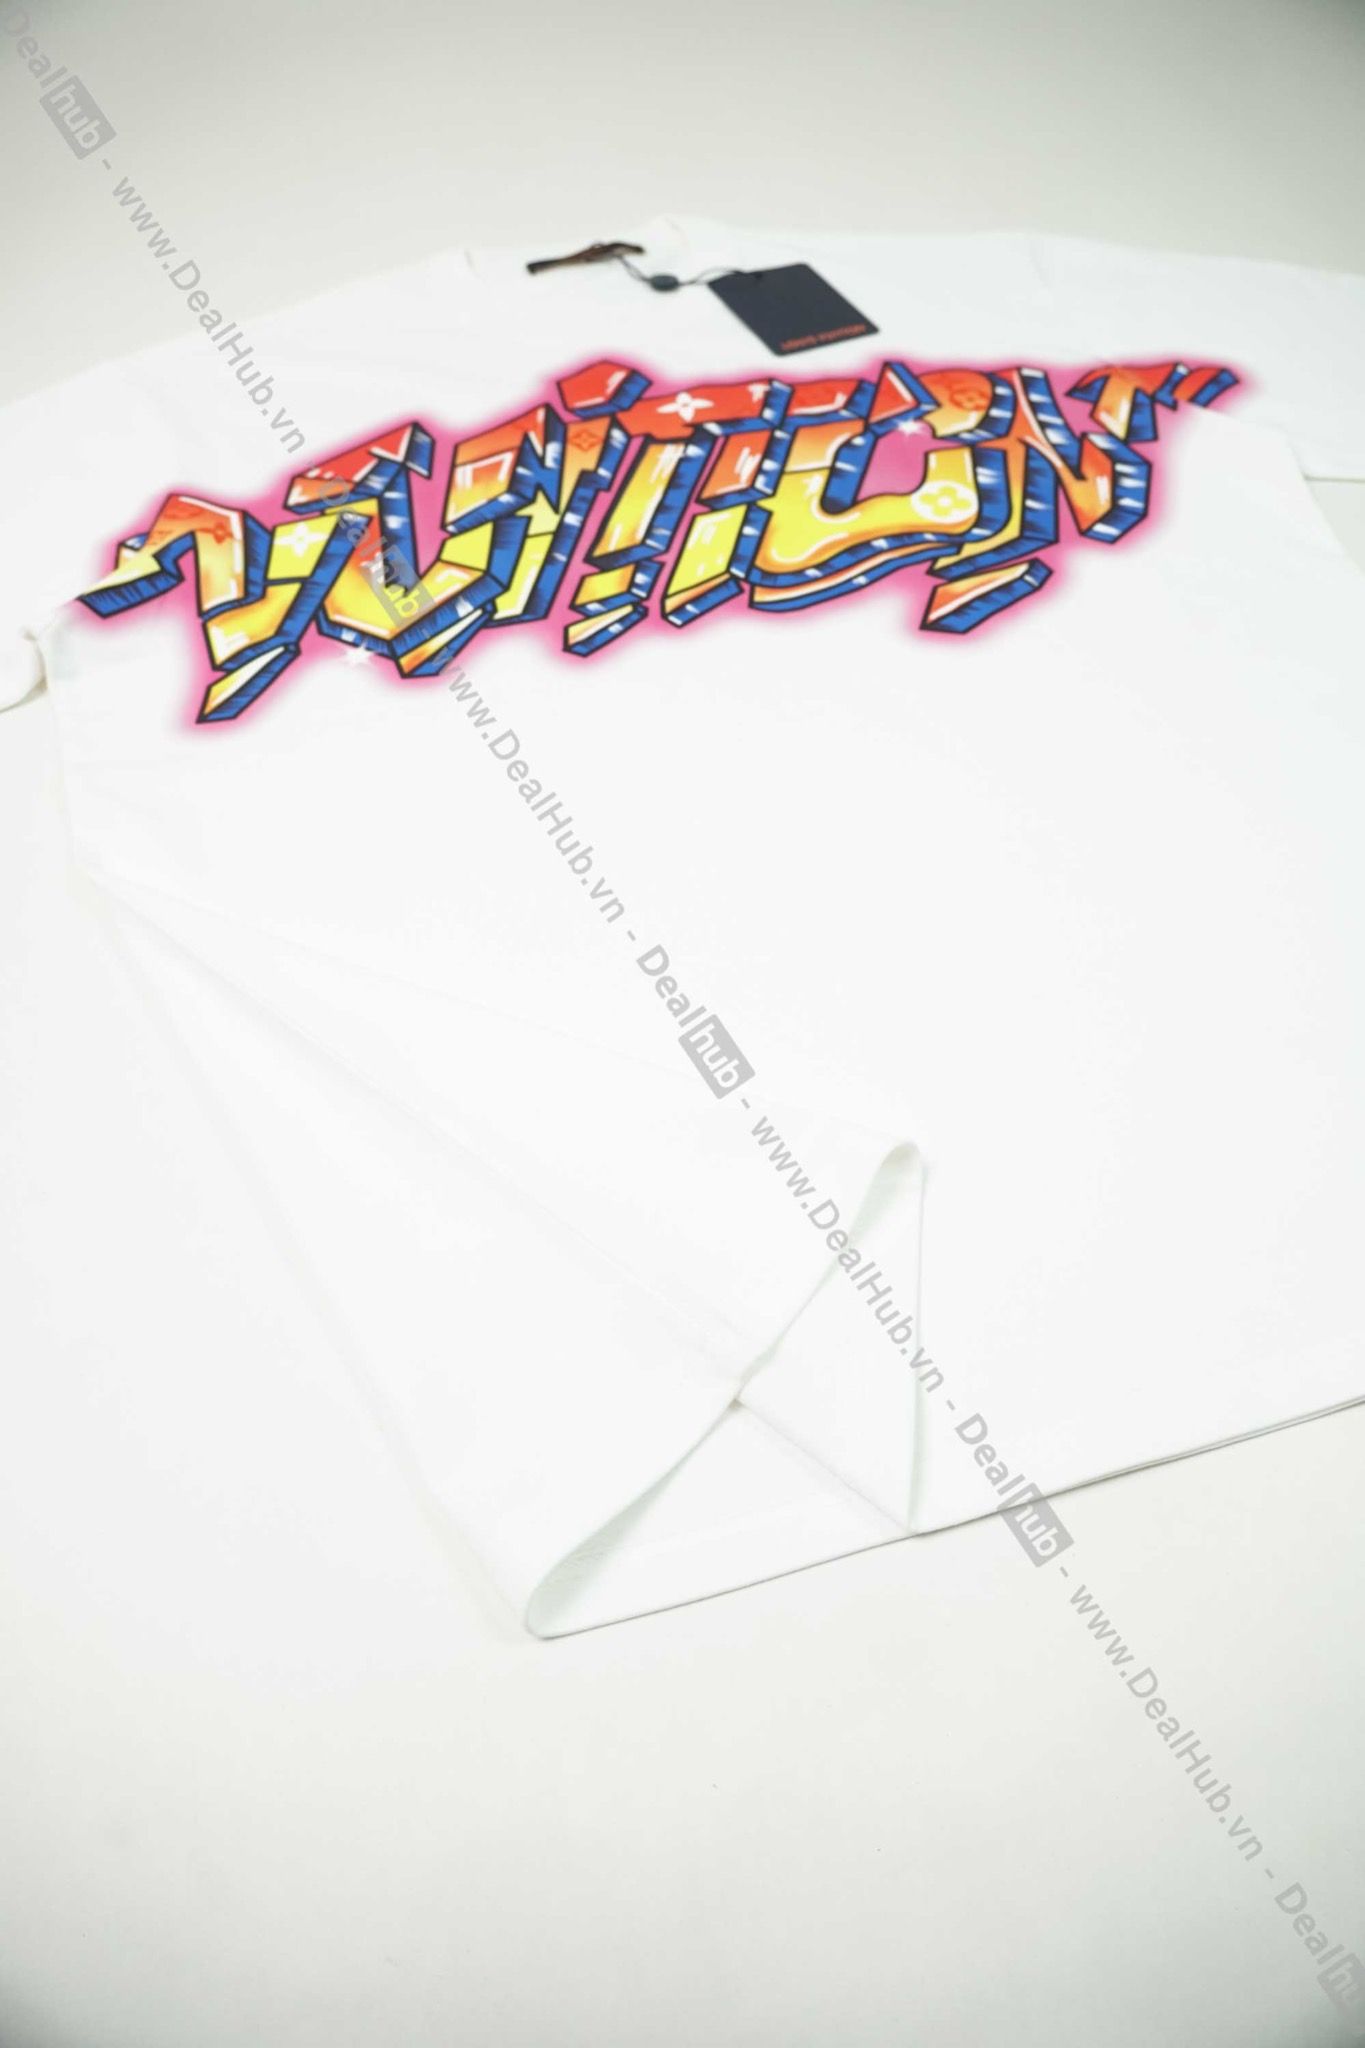 Louis Vuitton Men039s XL Virgil Abloh 1990039s Style Graffiti TShirt  Tee Shirt  eBay